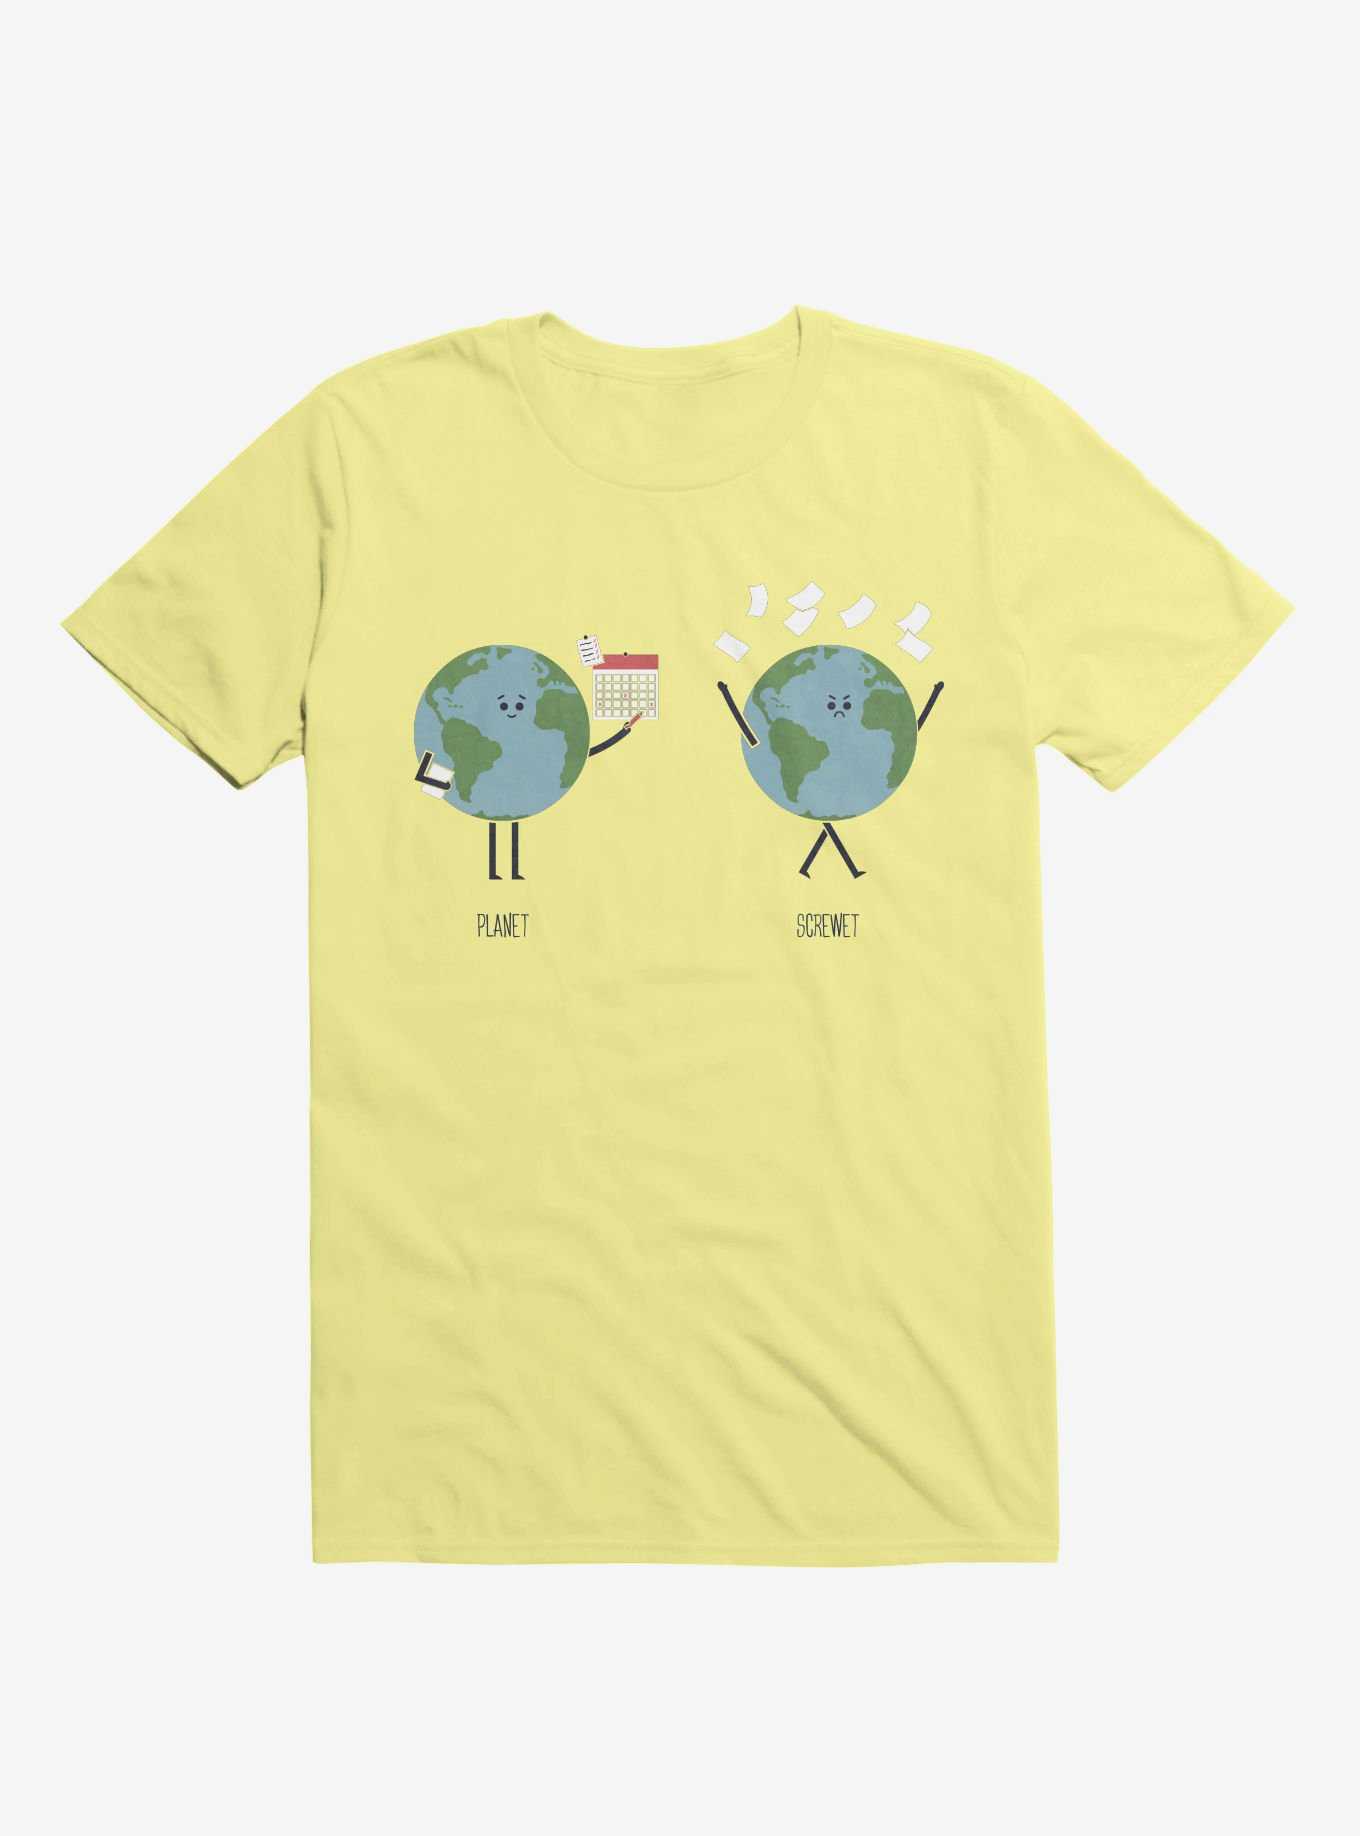 Opposites Planet Screwet Corn Silk Yellow T-Shirt, , hi-res